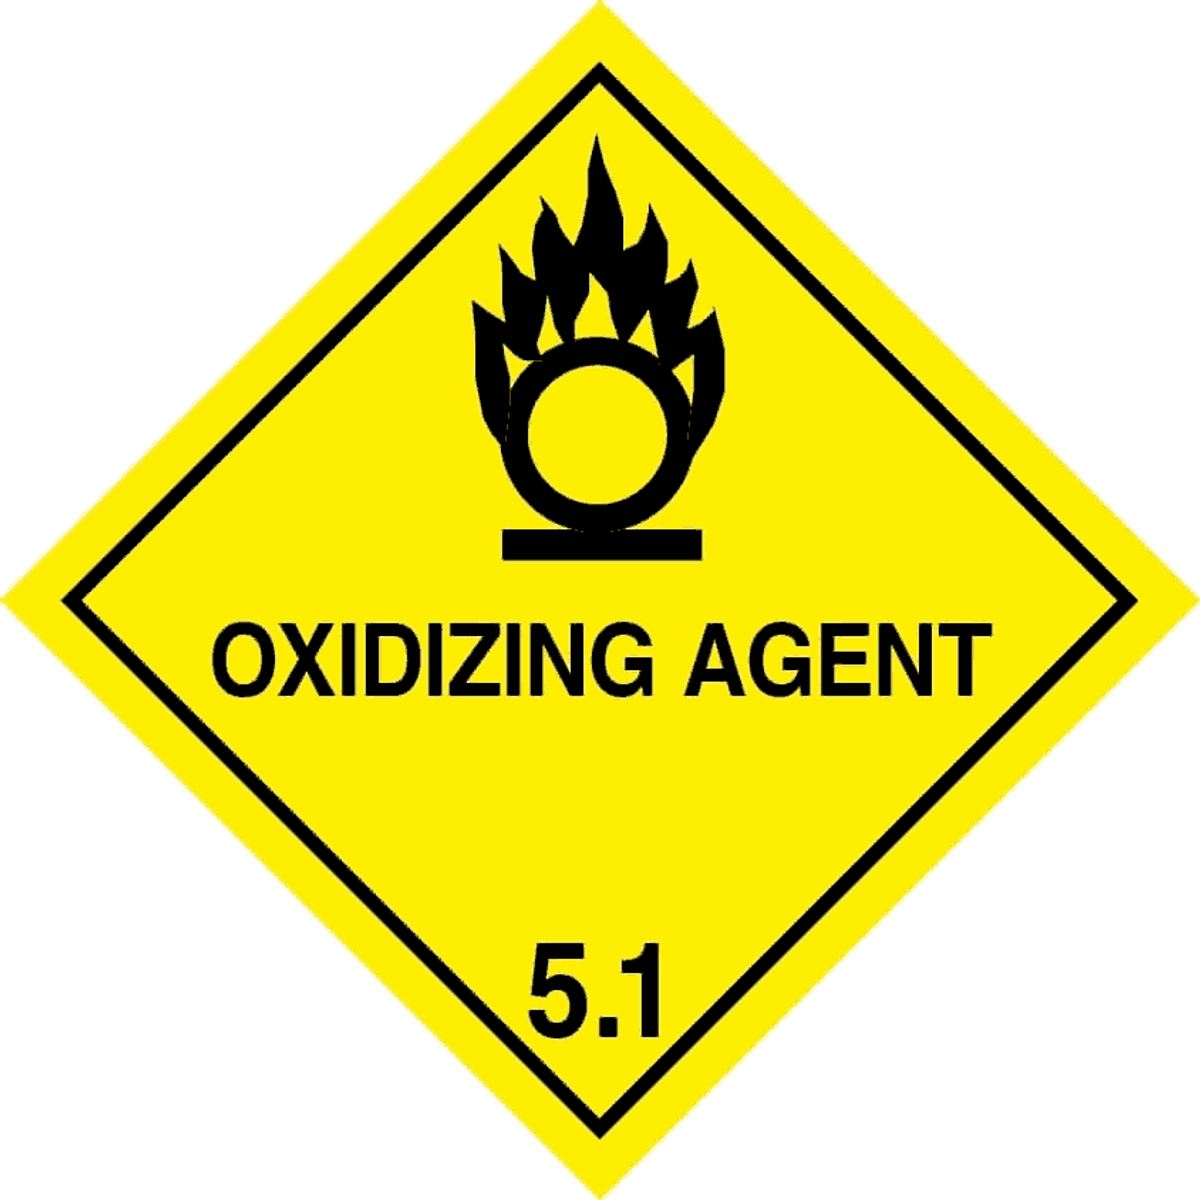 Class 5.1 oxidizing agent label